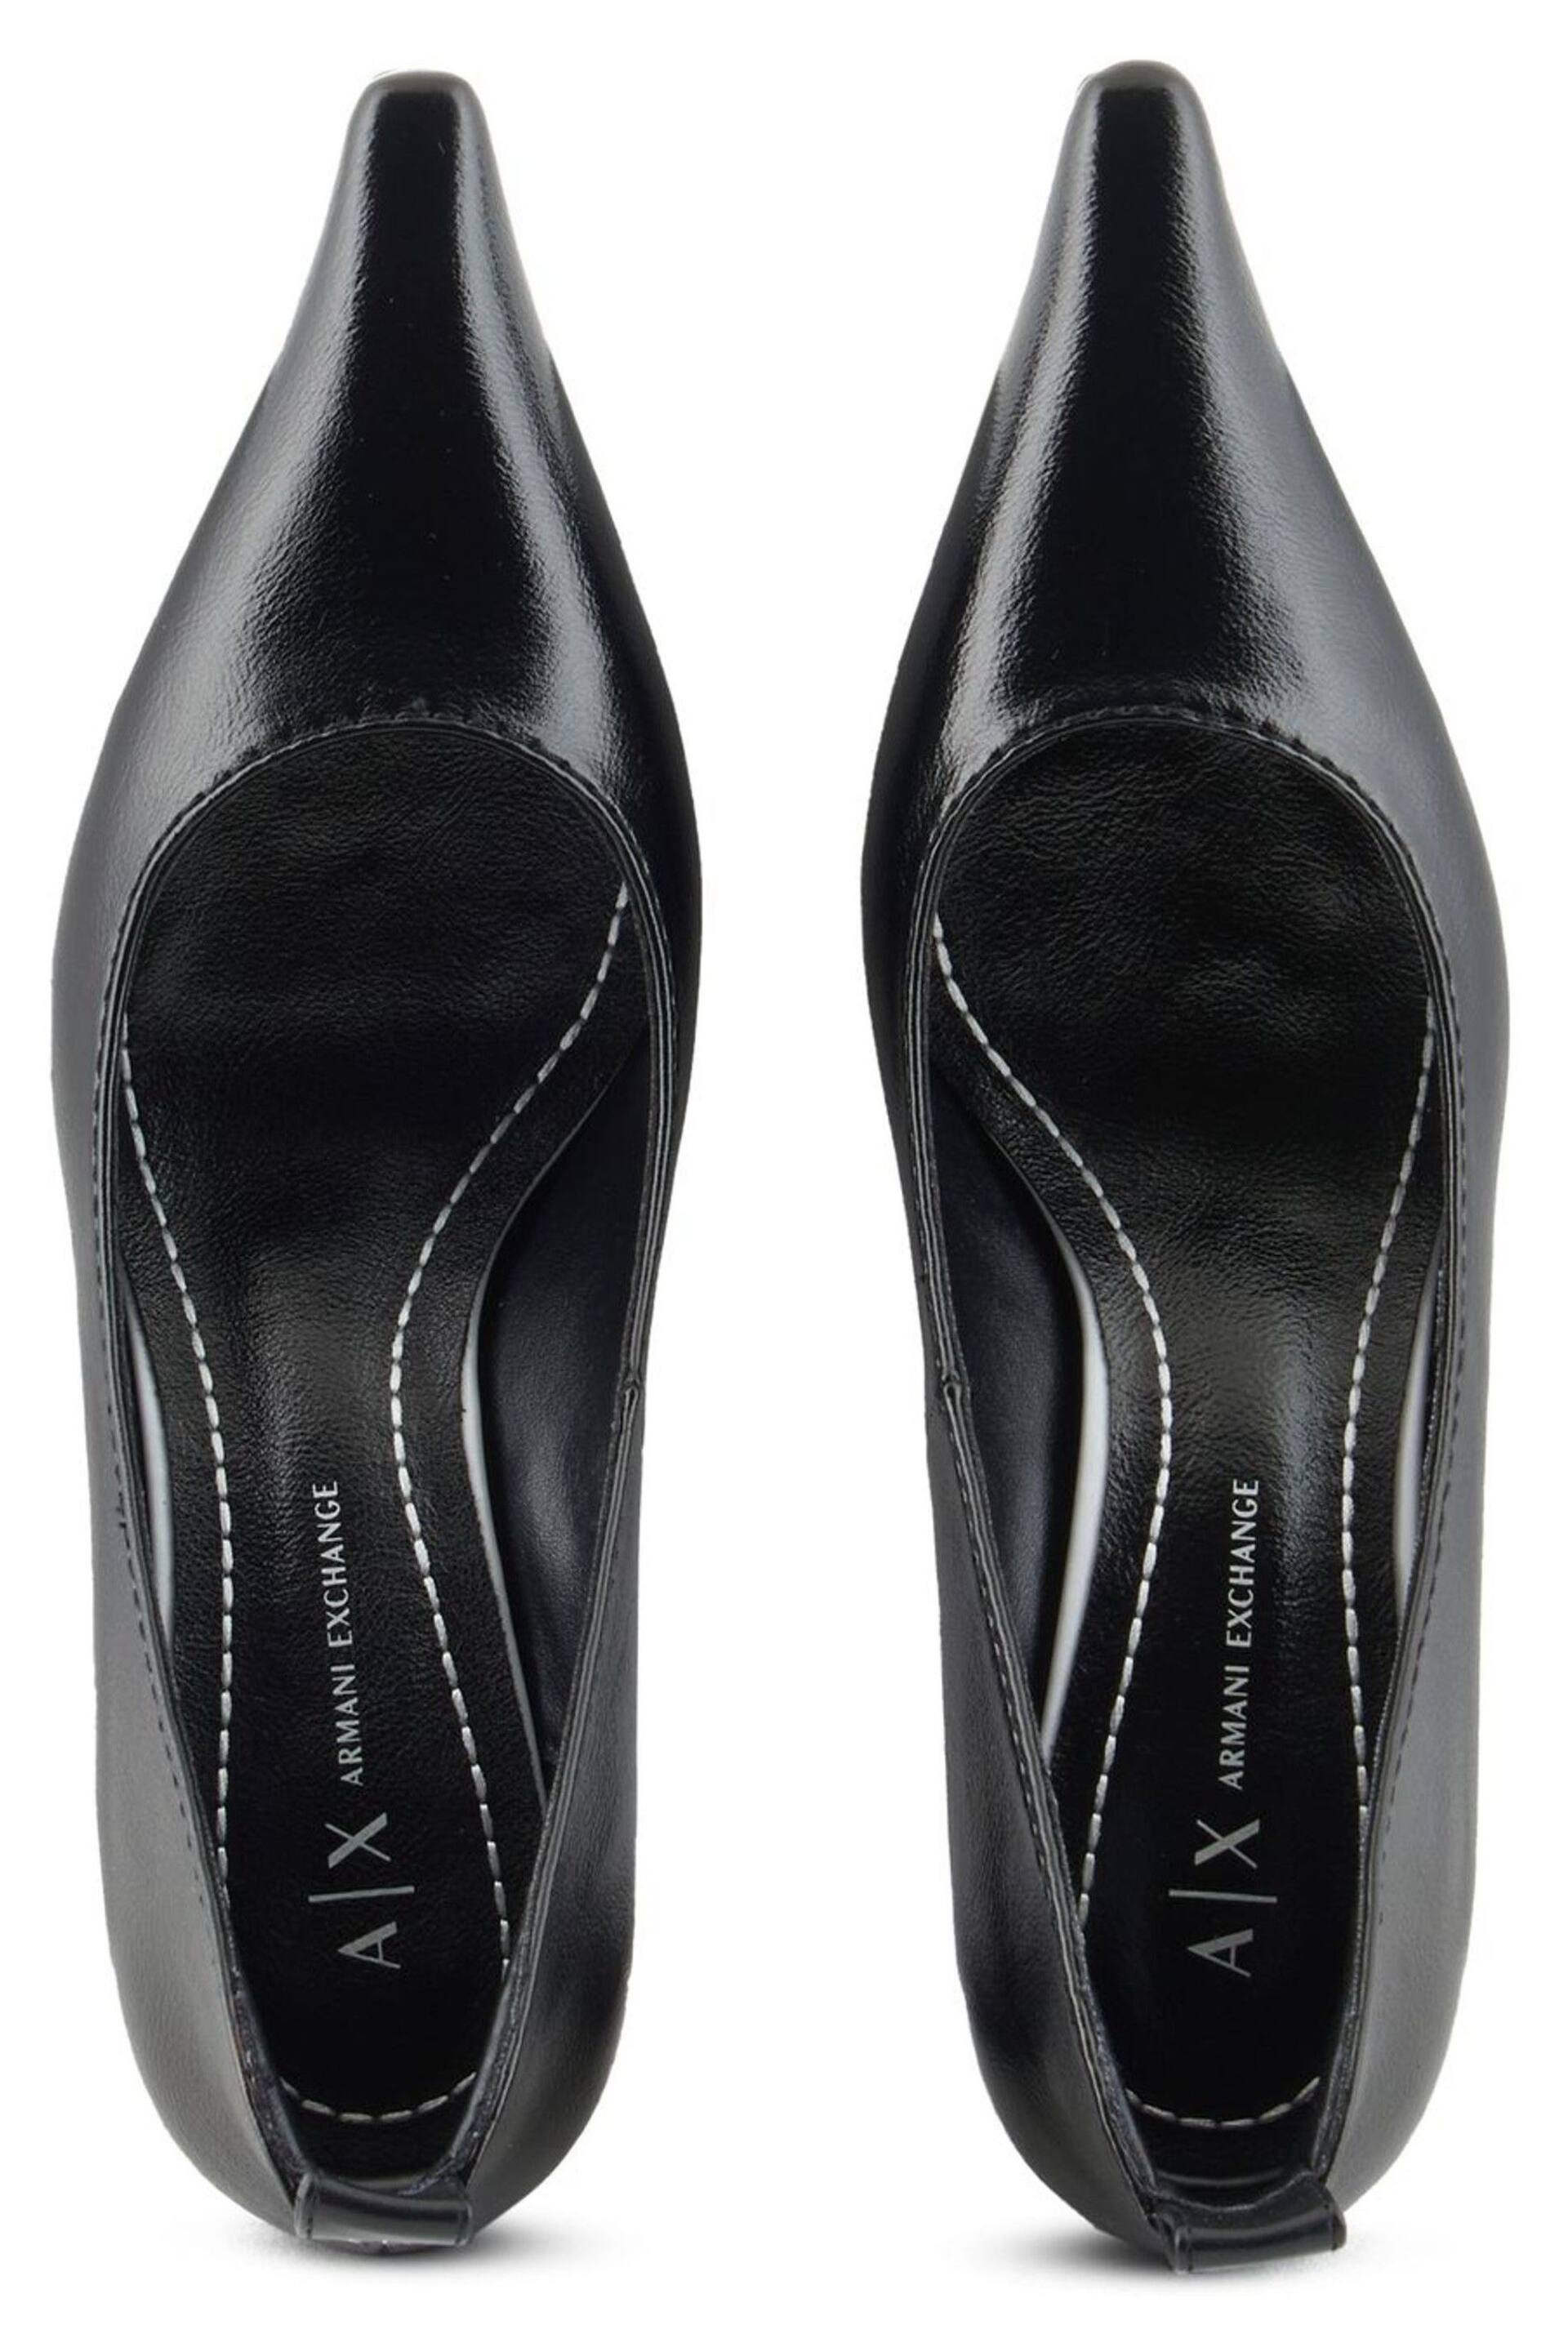 Armani Exchange Stiletto Black Shoes - Image 3 of 4